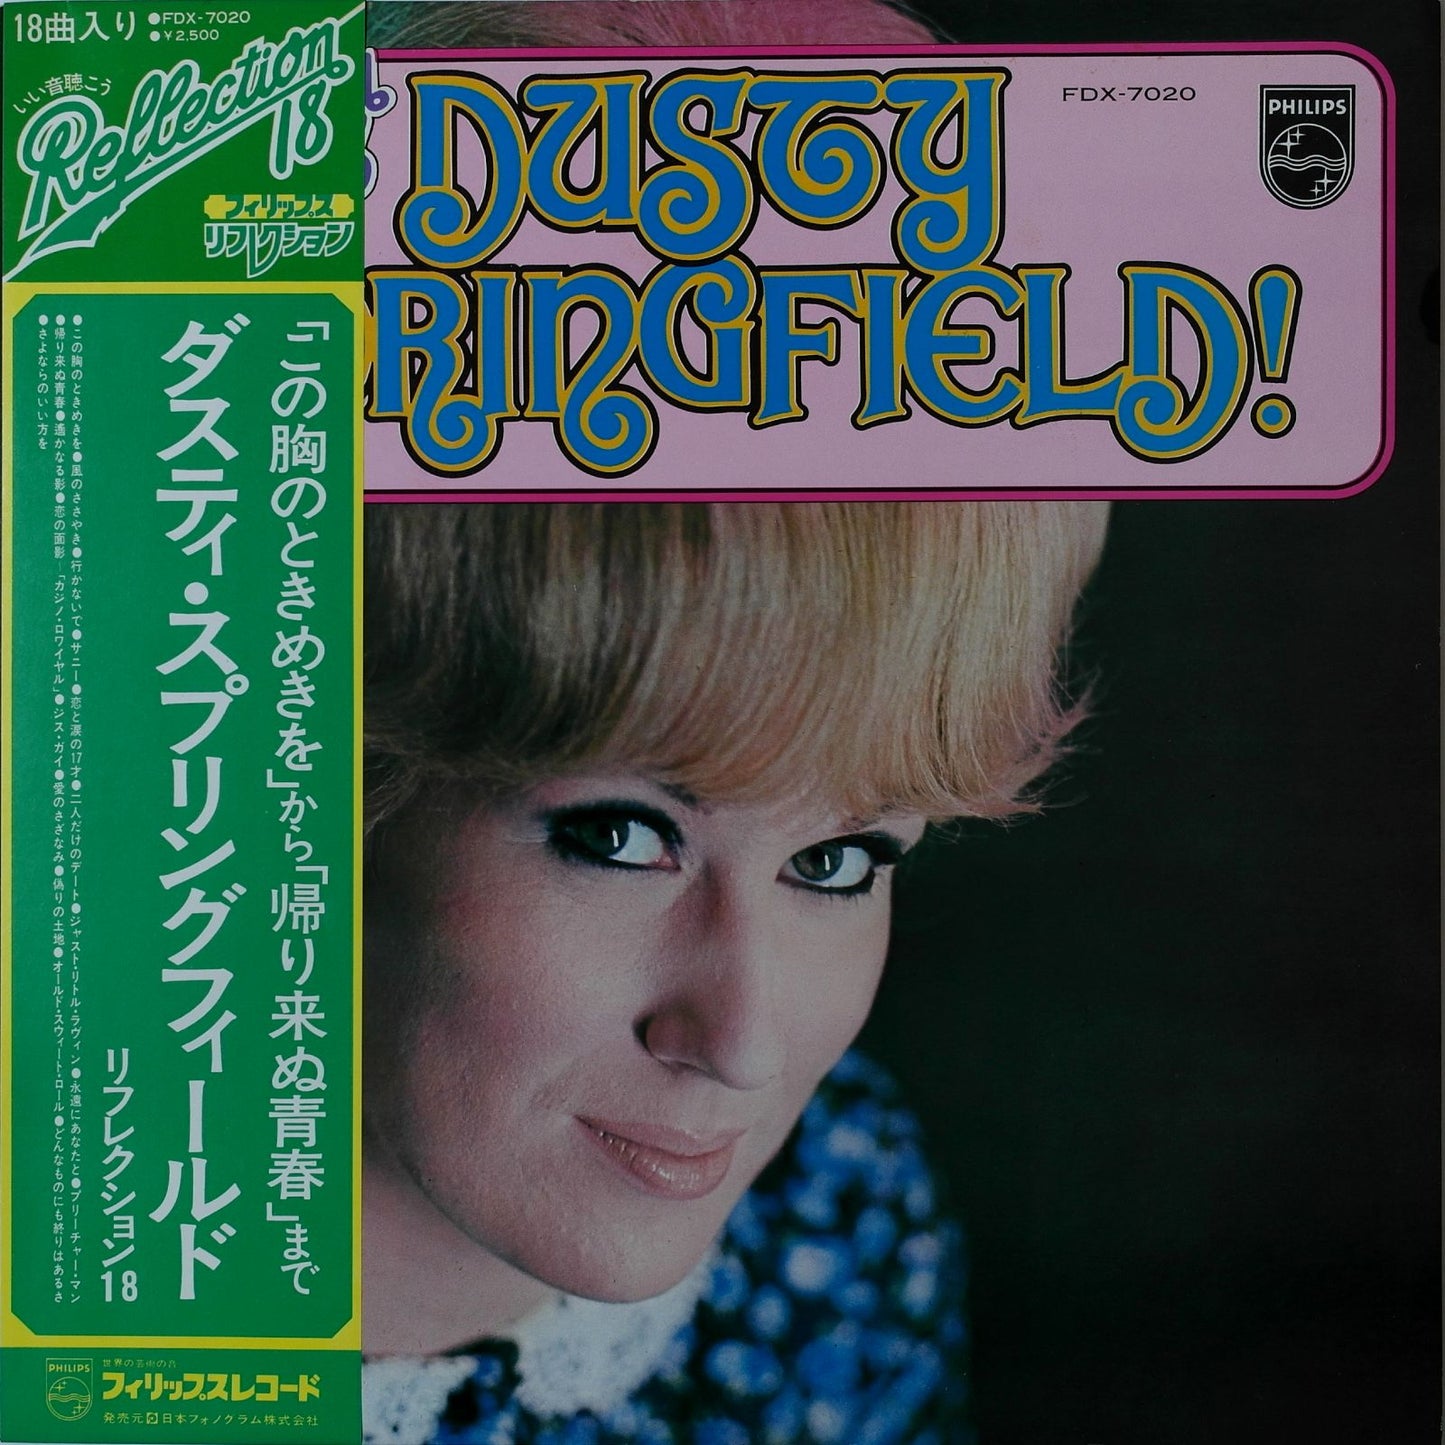 DUSTY SPRINGFIELD - Reflection 18 - Dusty Springfield!